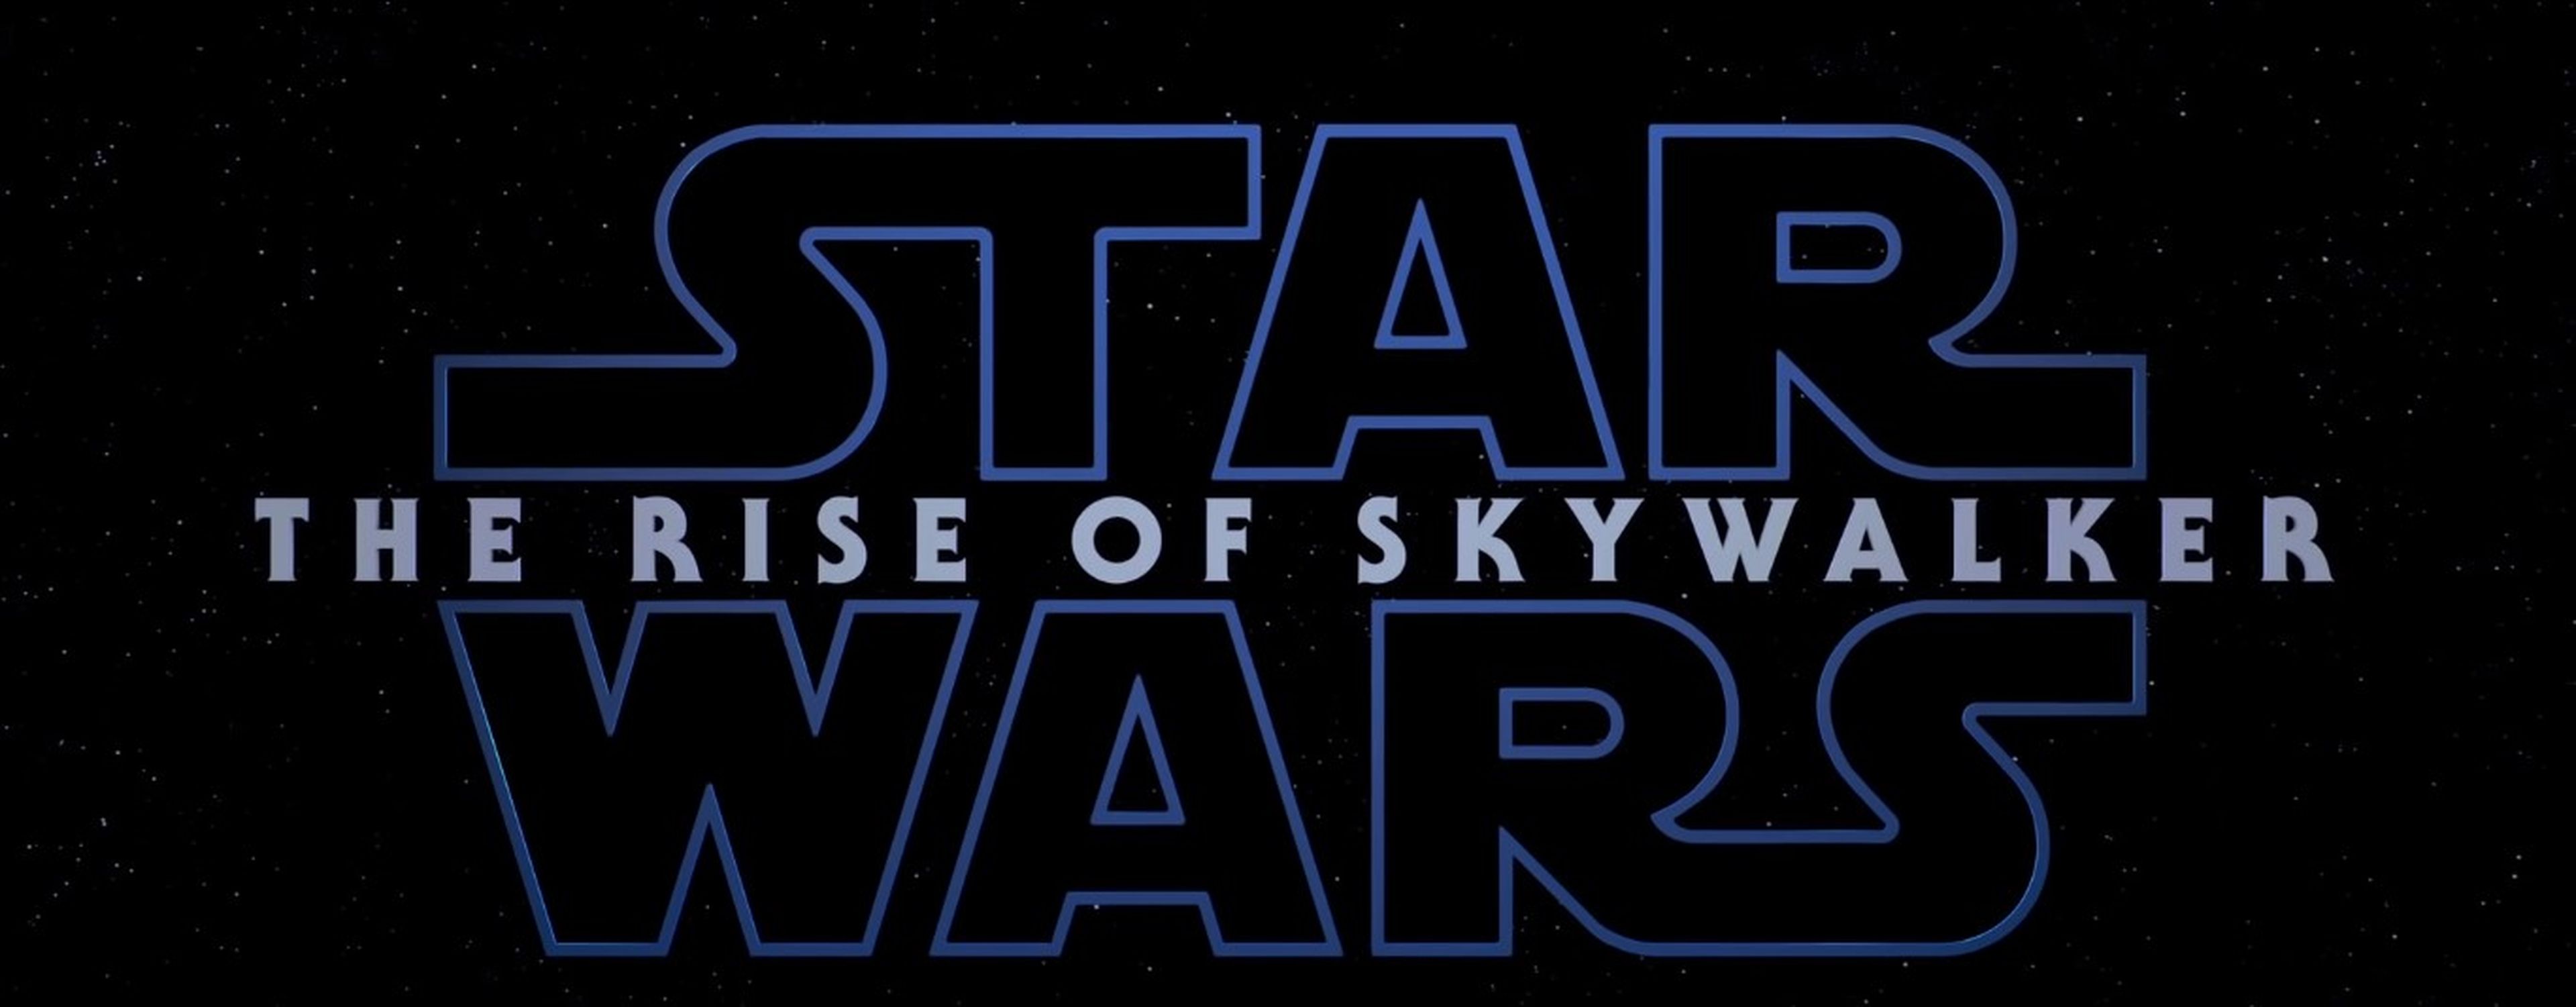 Star Wars - Episodio IX: The Rise of Skywalker